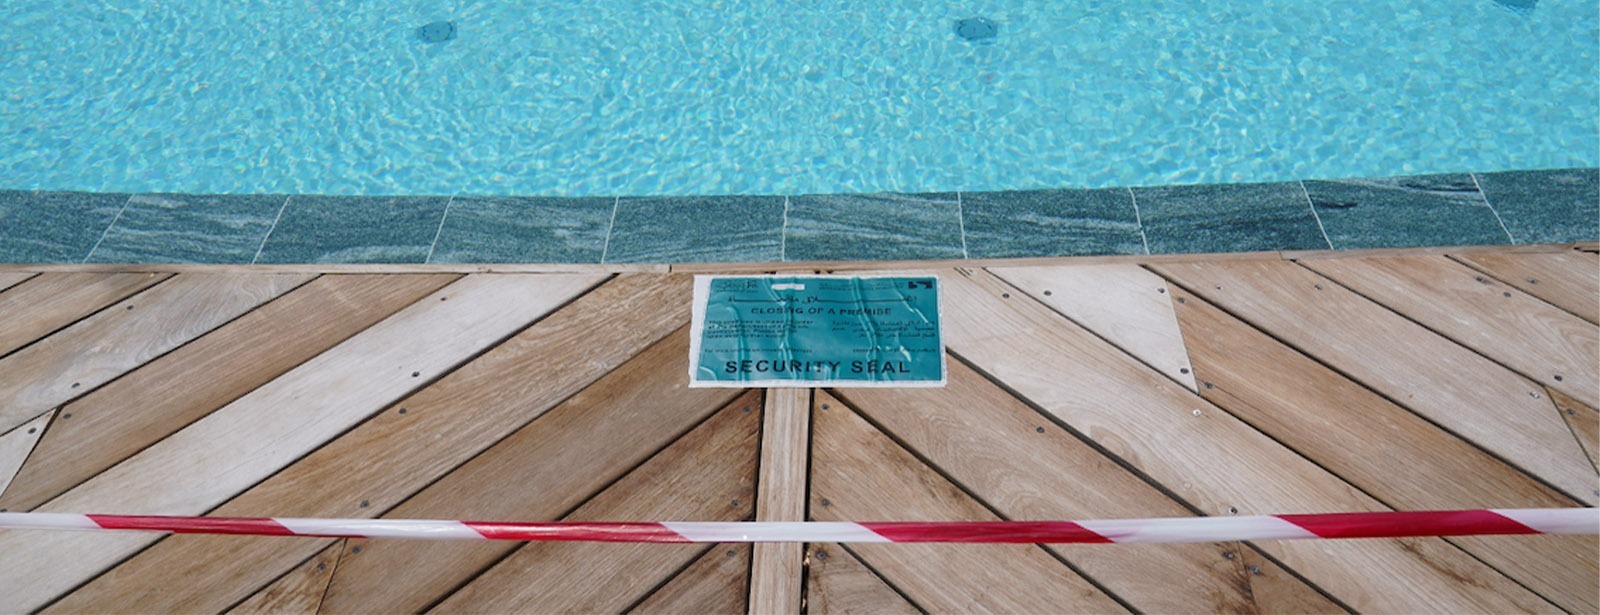 Dubai Shuts Down Swimming Pool - Coming Soon in UAE